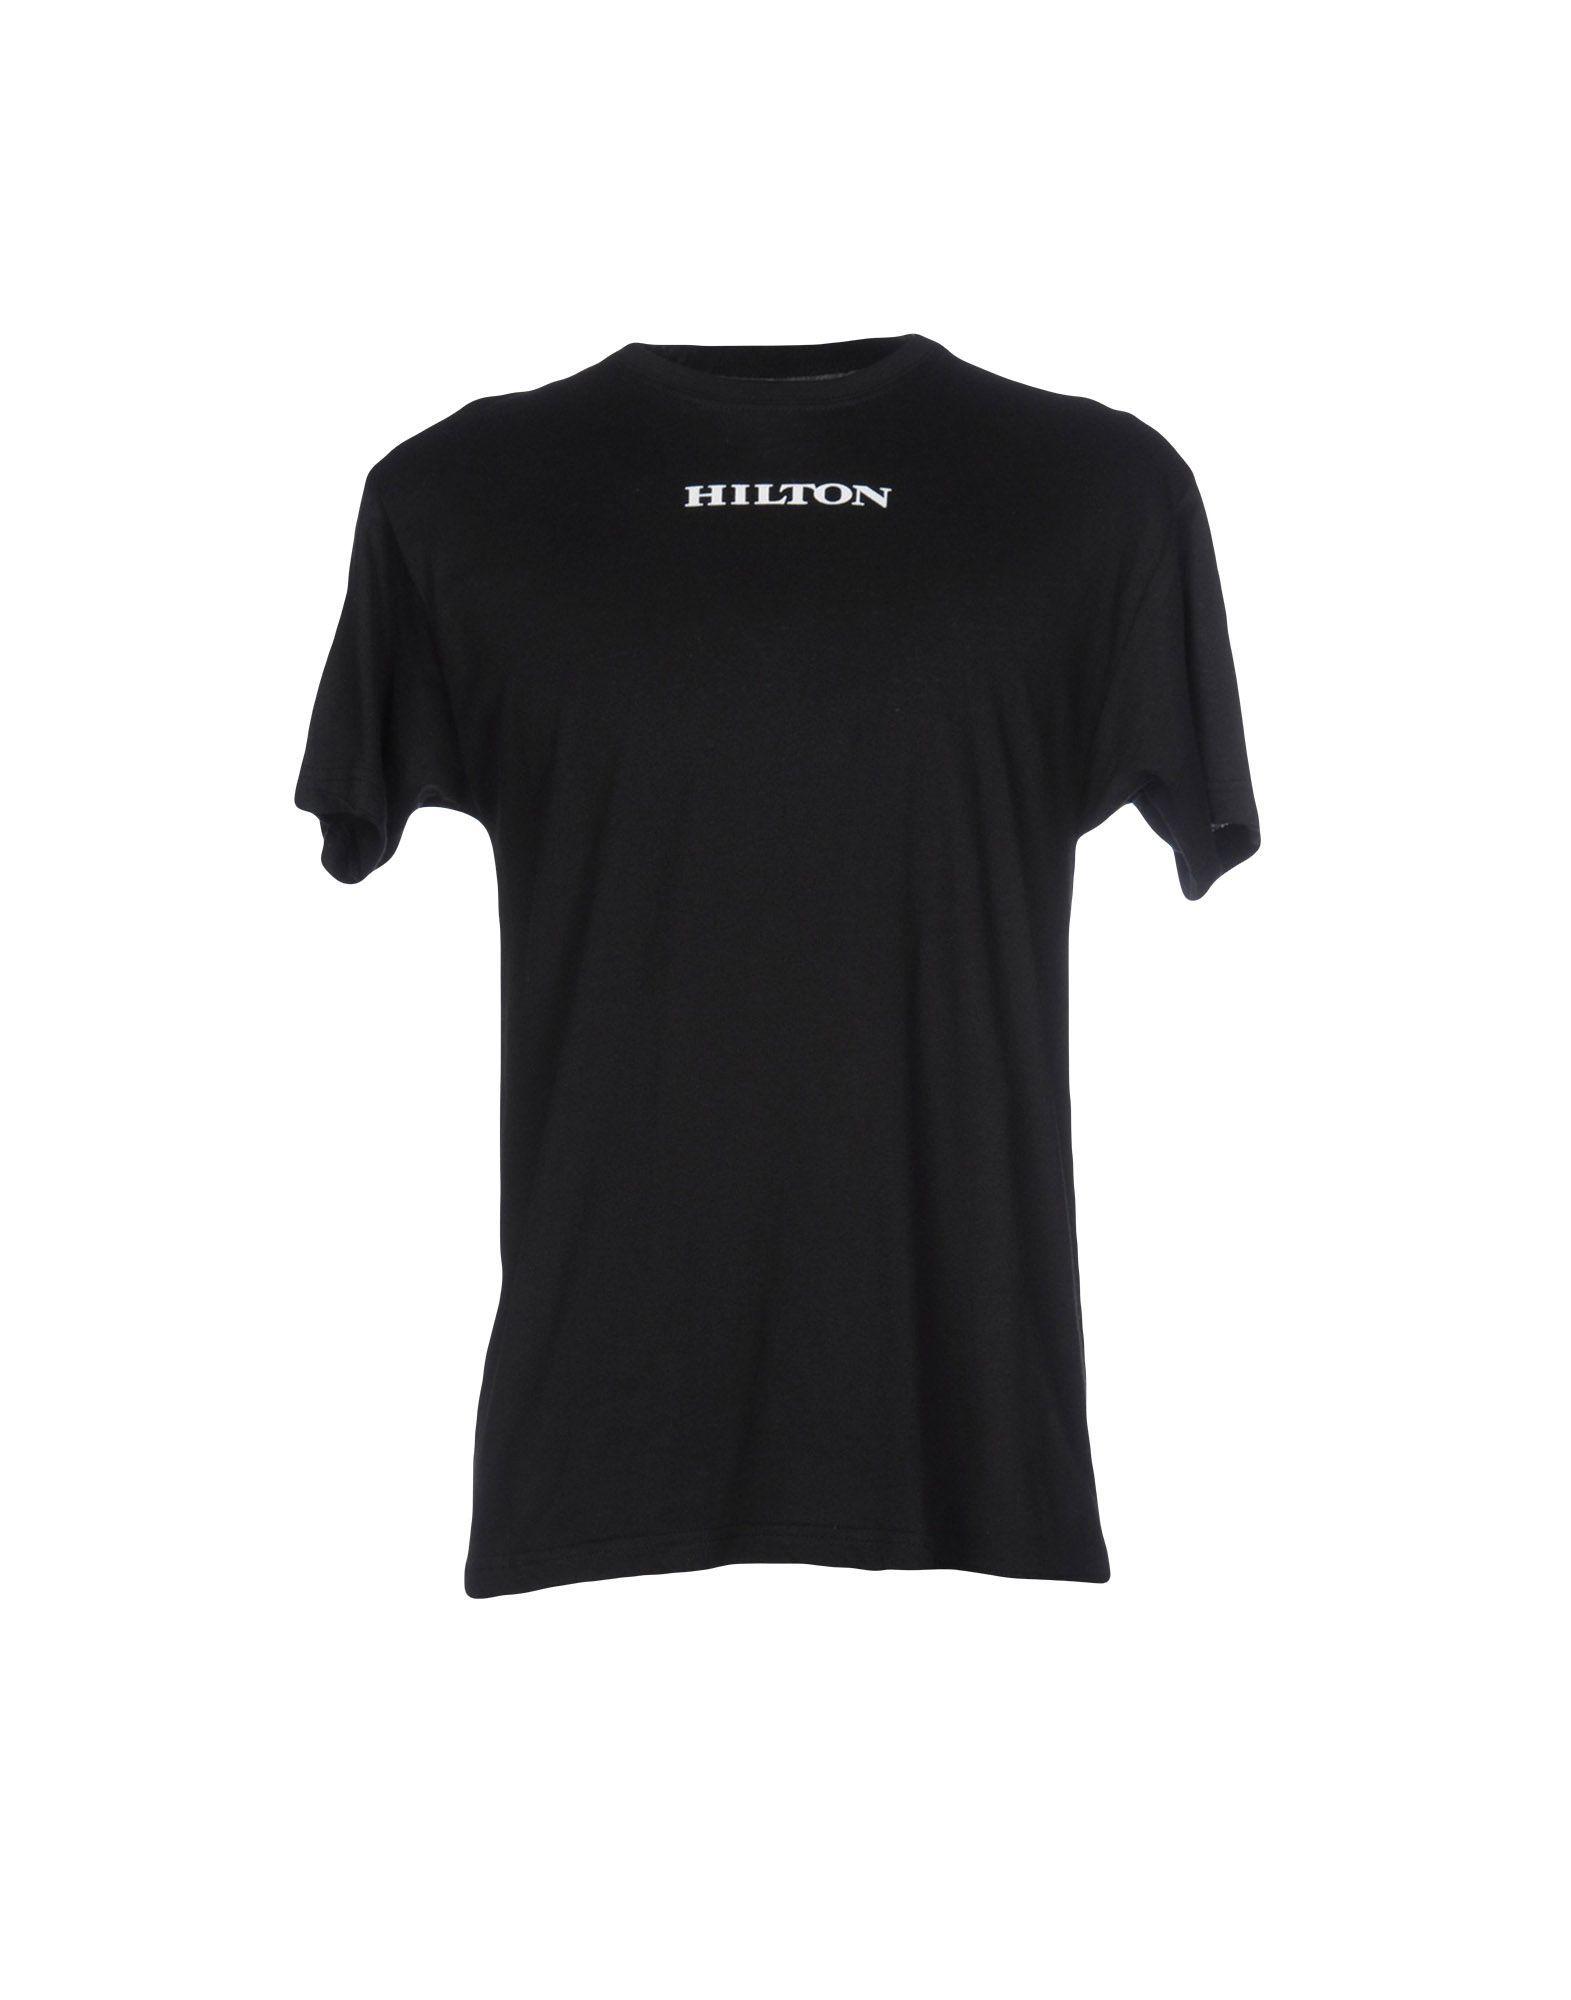 Hilton Clothing Logo - Hilton T Shirt Hilton T Shirts Online On YOOX United States